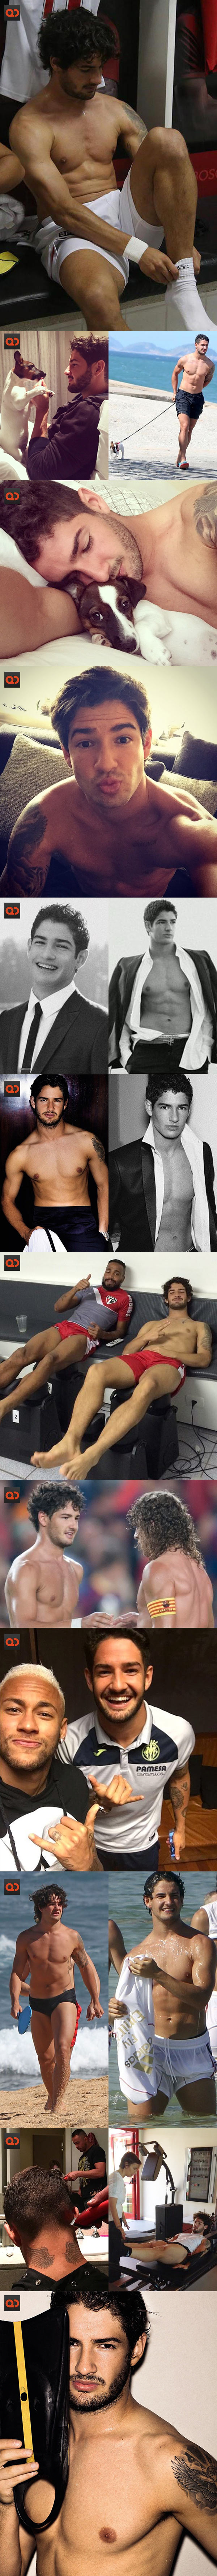 Alexandre Pato, Brazilian Pro Football Player, Alleged Dick Pics Hit!